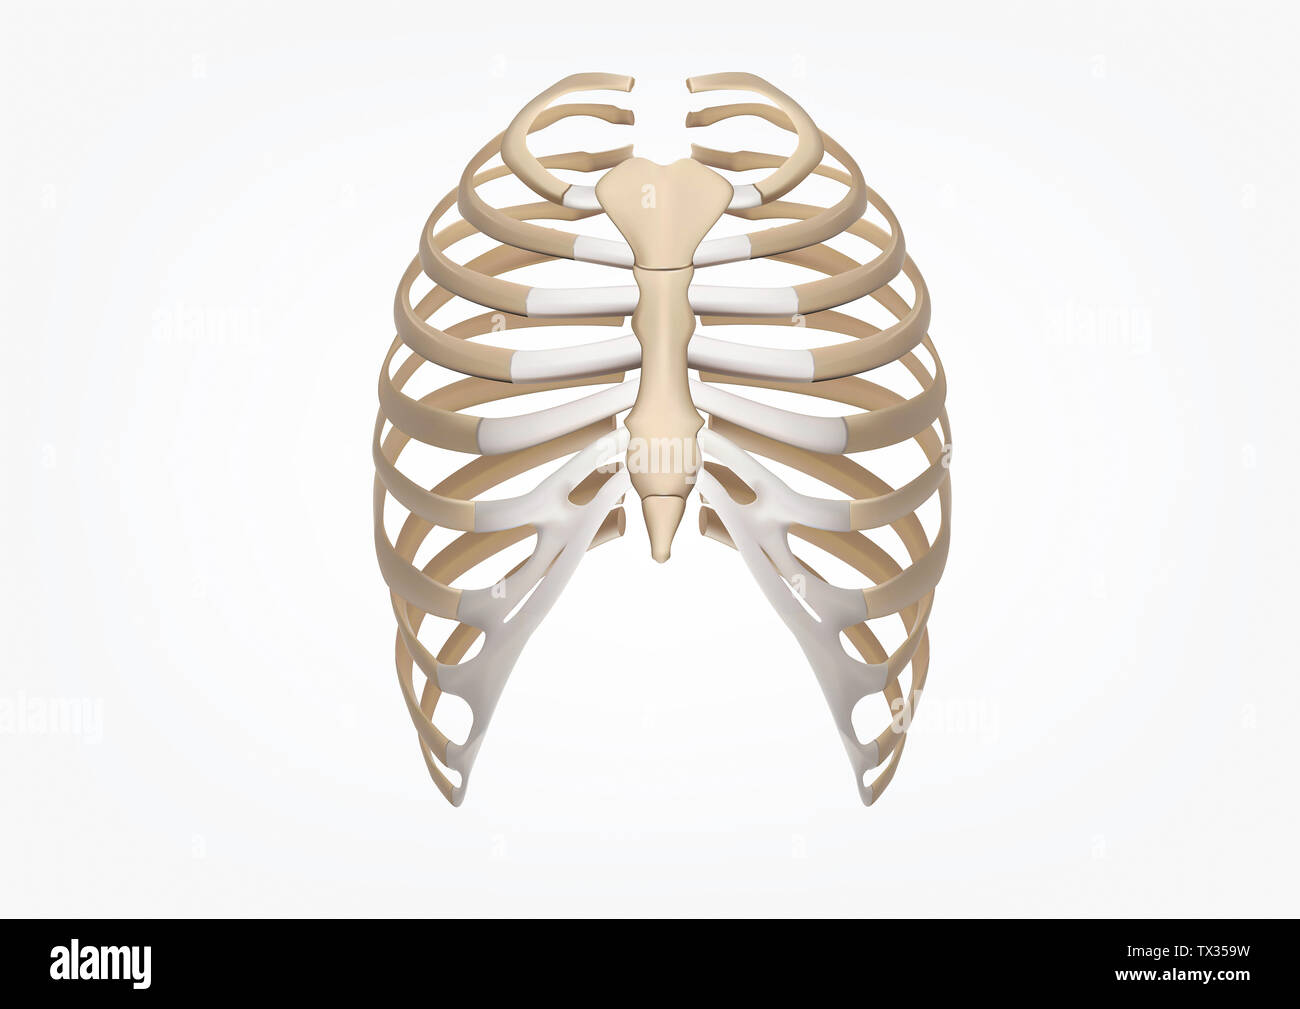 Human Rib 3D Illustration of Human Skeleton Rib Cage Anatomy Front view Stock Photo